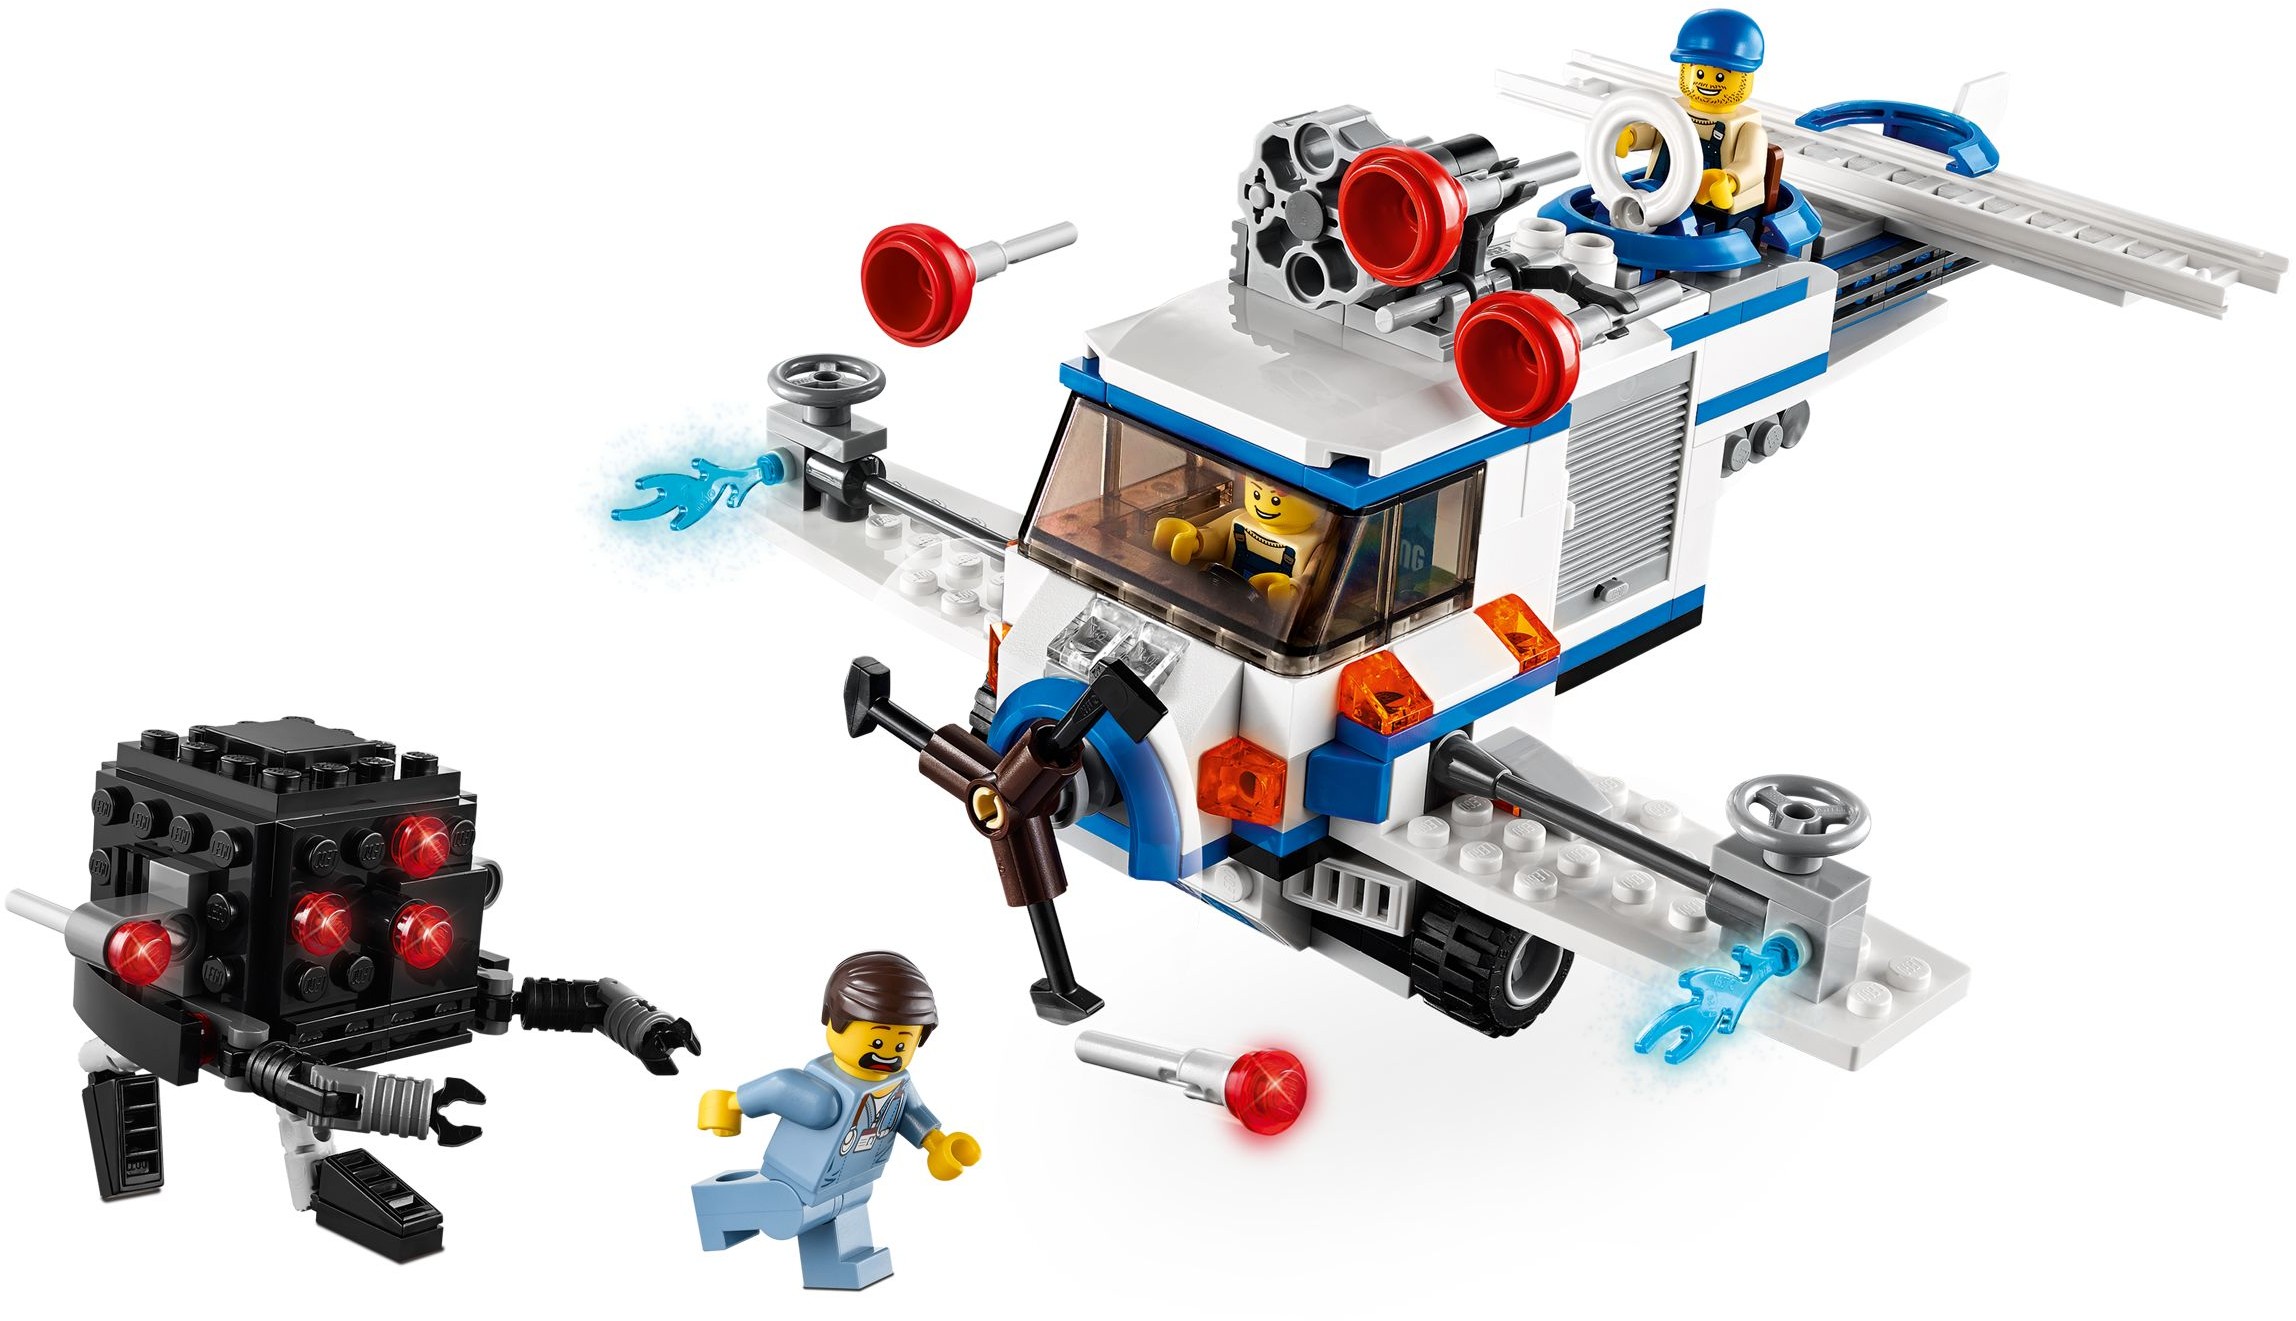 impliceren mengsel Spelen met The LEGO Movie | 2 in 1 | Brickset: LEGO set guide and database